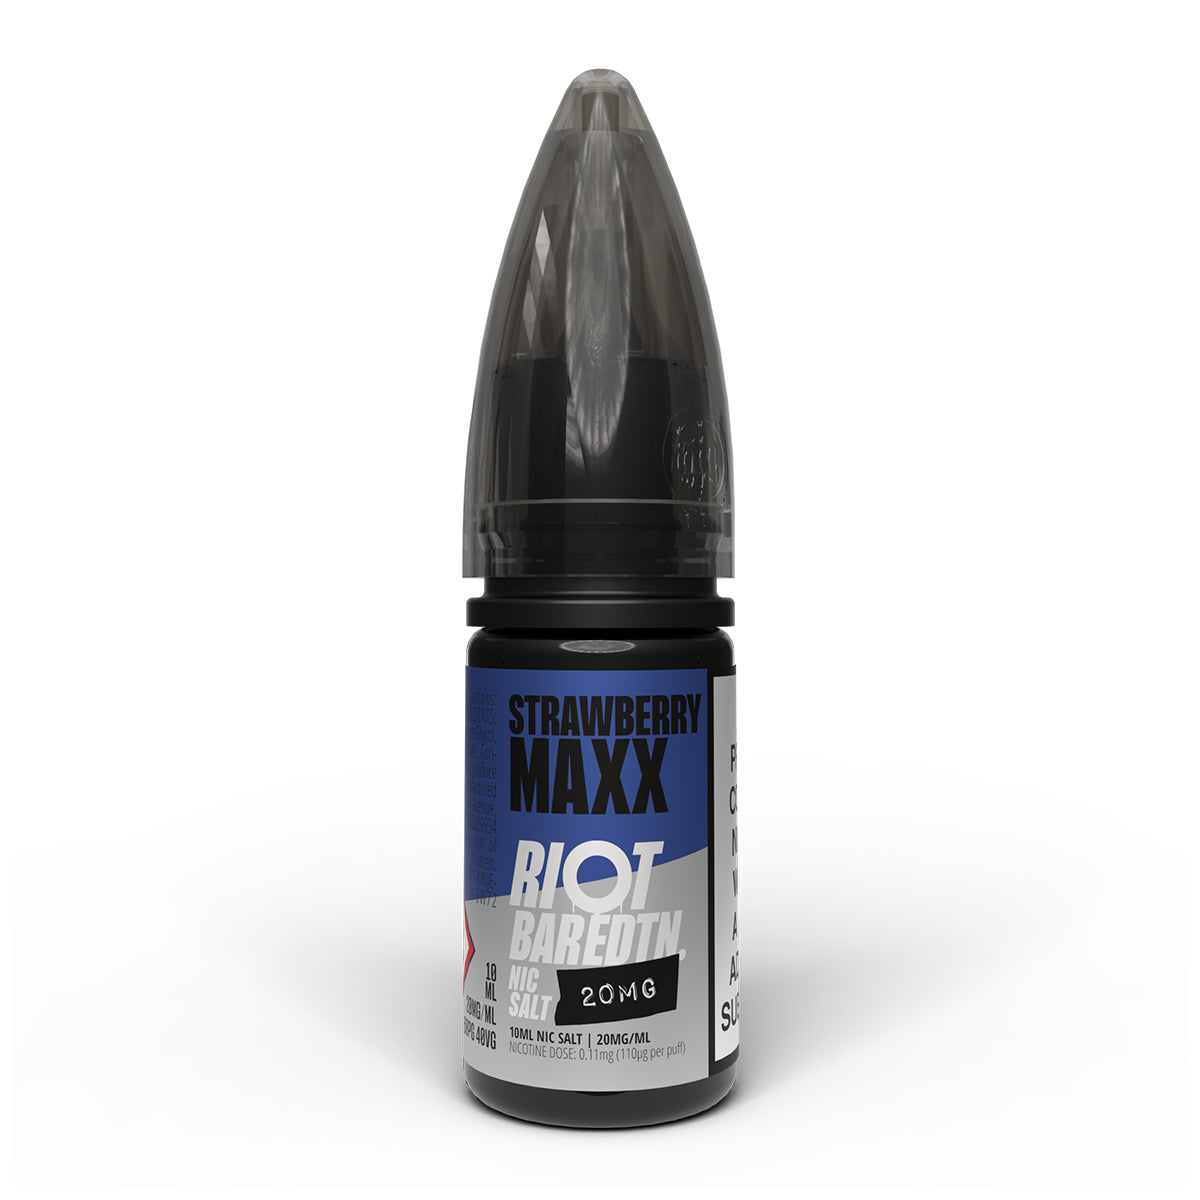 Strawberry Maxx 10ml Nicotine Salt 20mg by Riot Bar Edtn